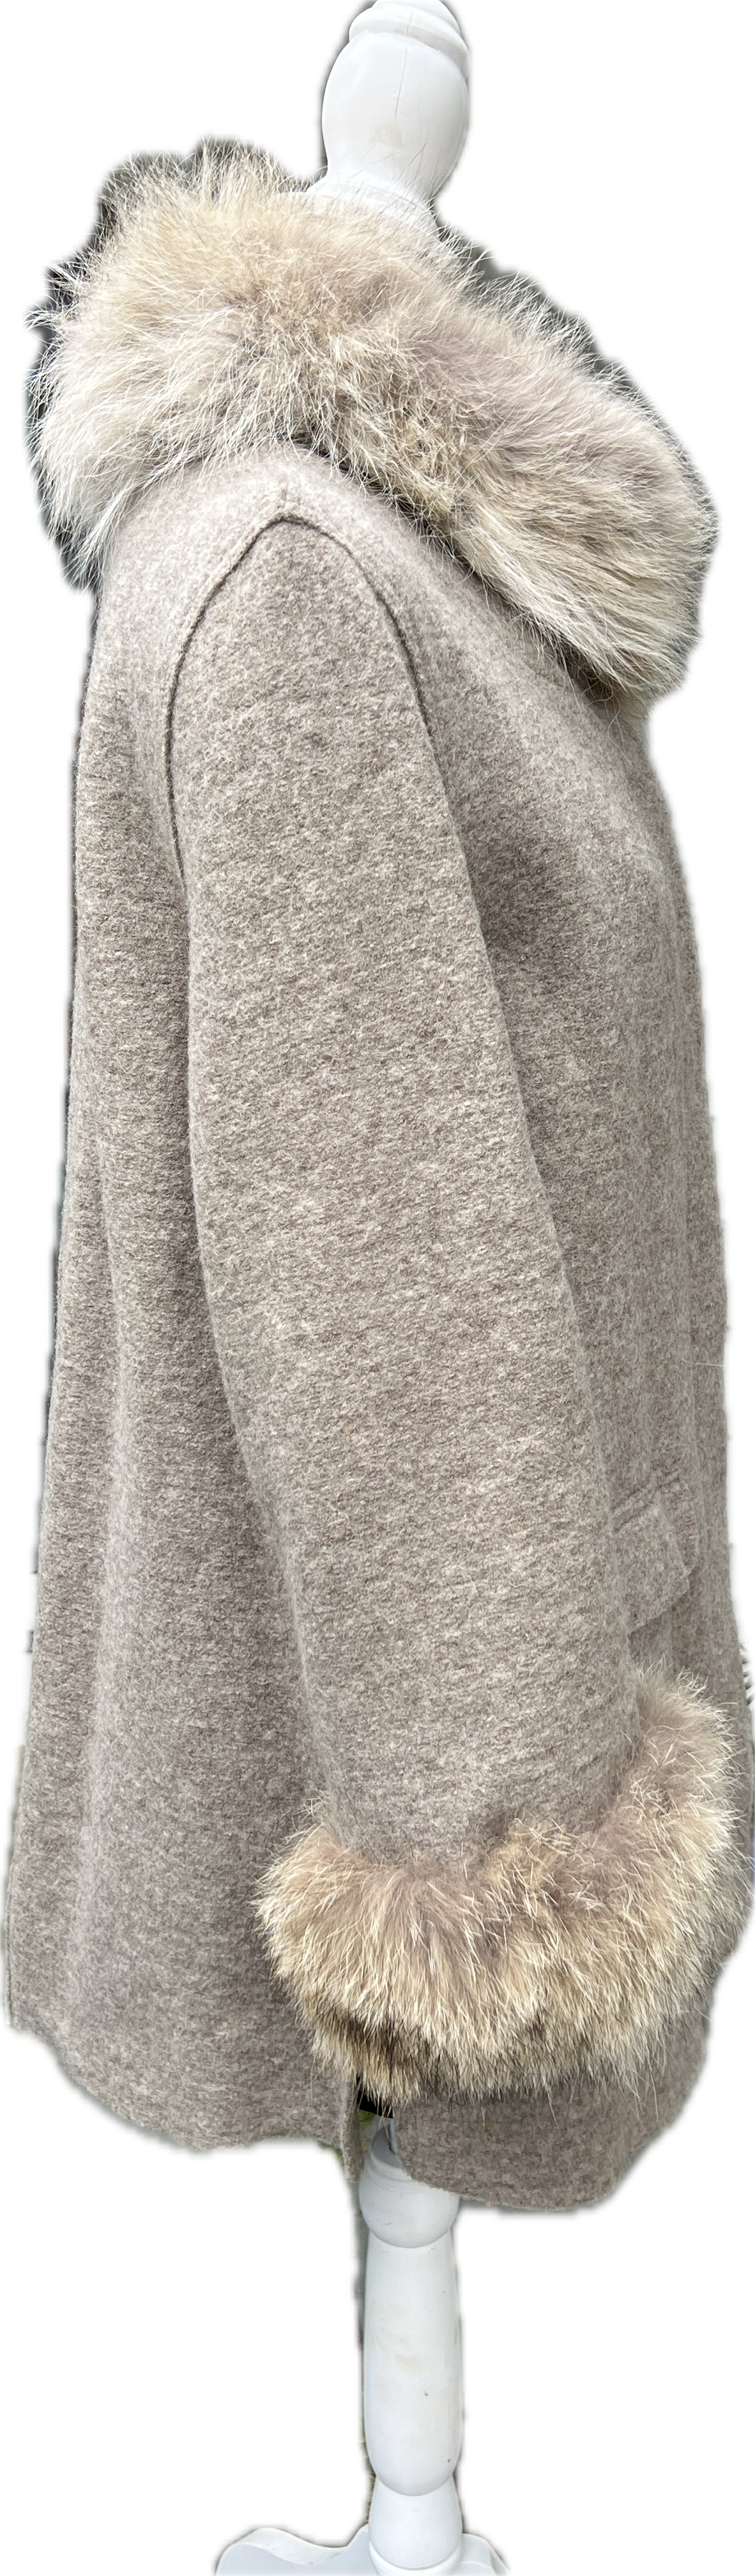 Hilary Radley Heather Beige Wool Coat with Fur Trim, 6